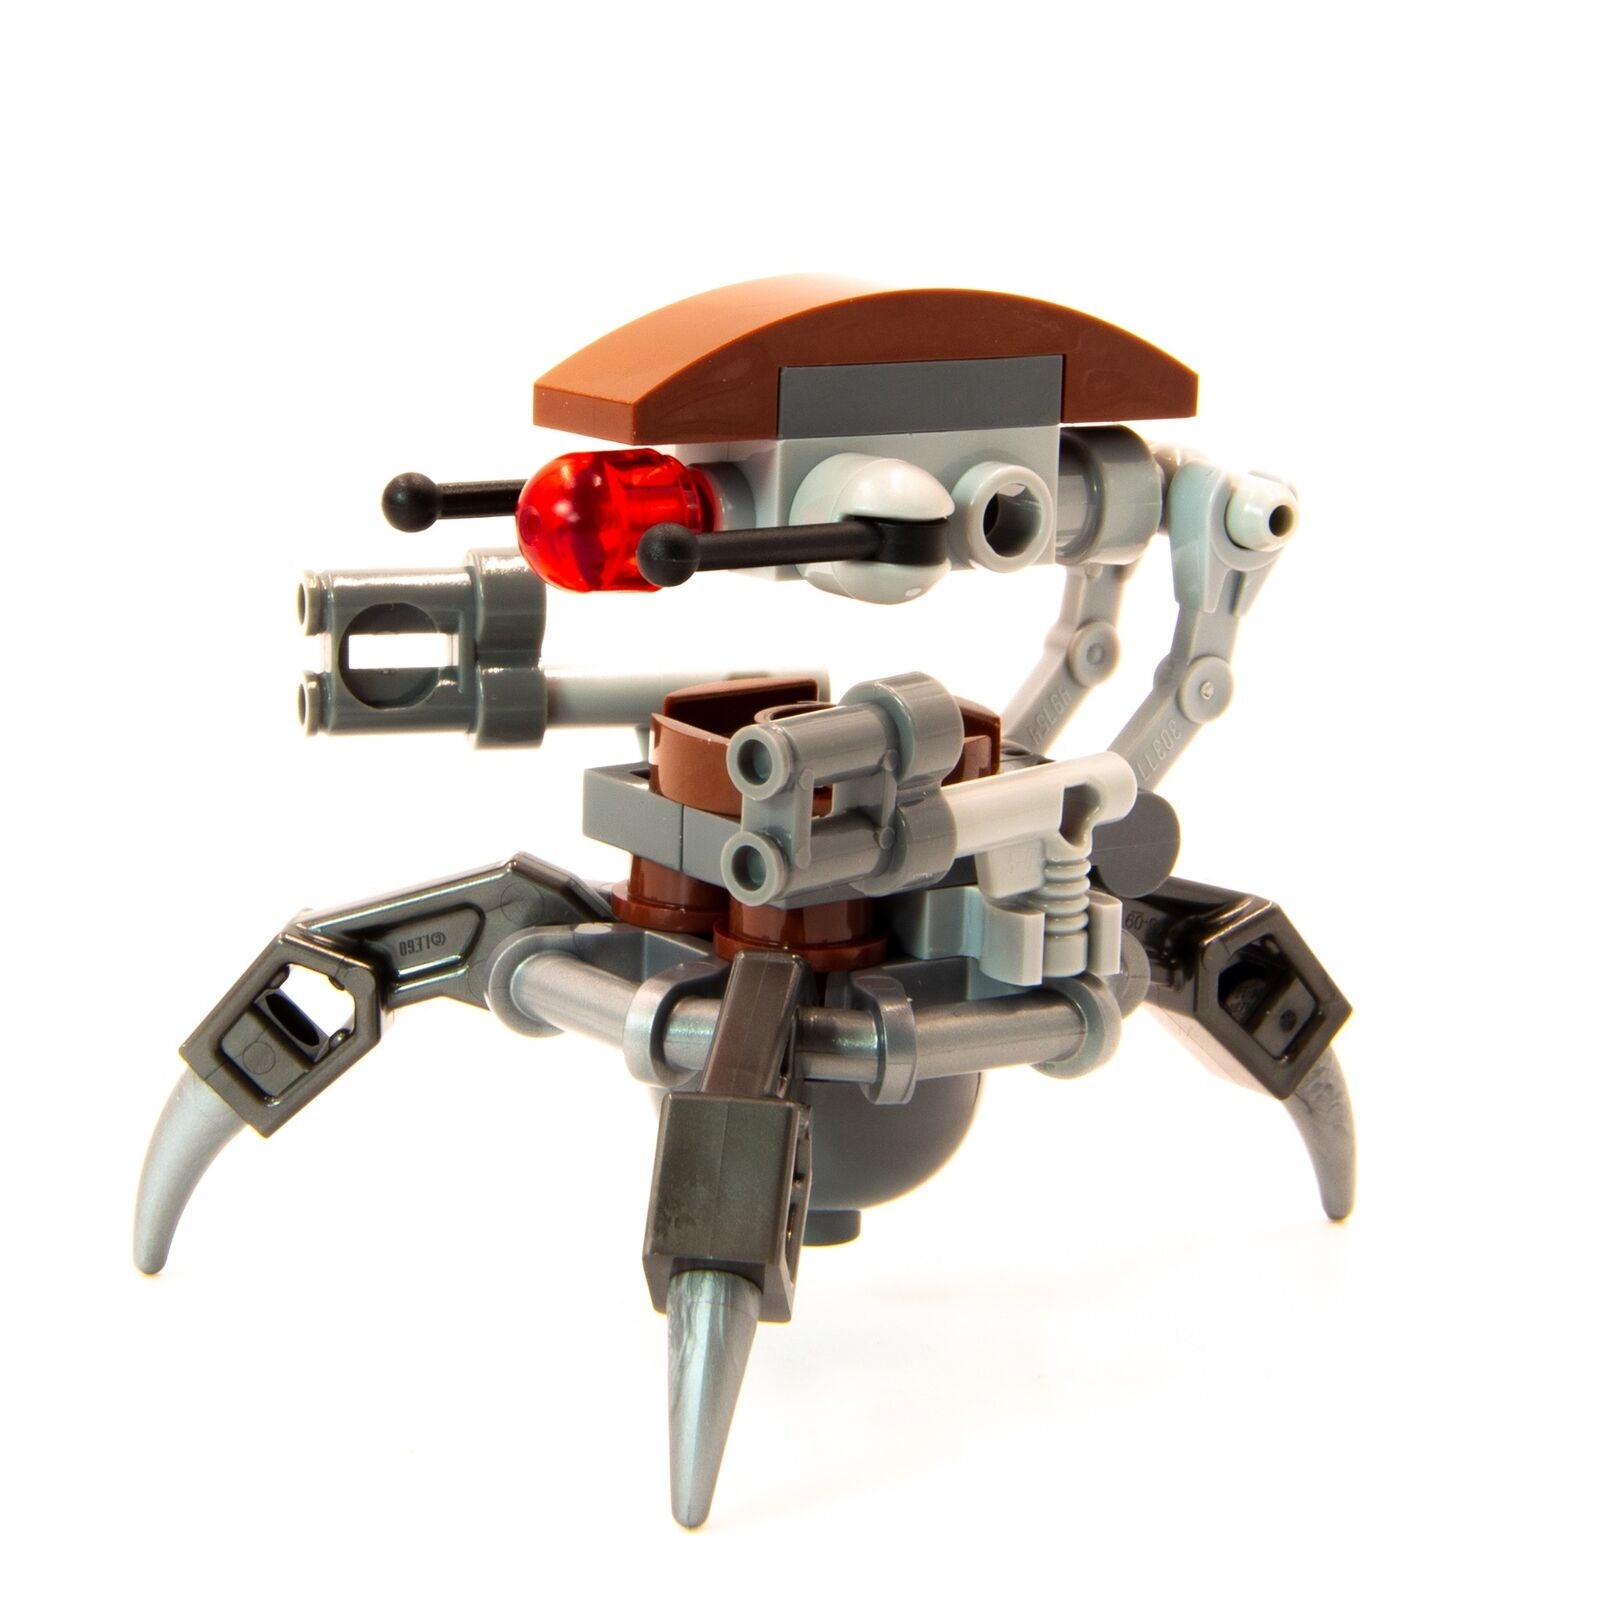 LEGO Star Wars Minifigure - Droideka (Gray Arms)